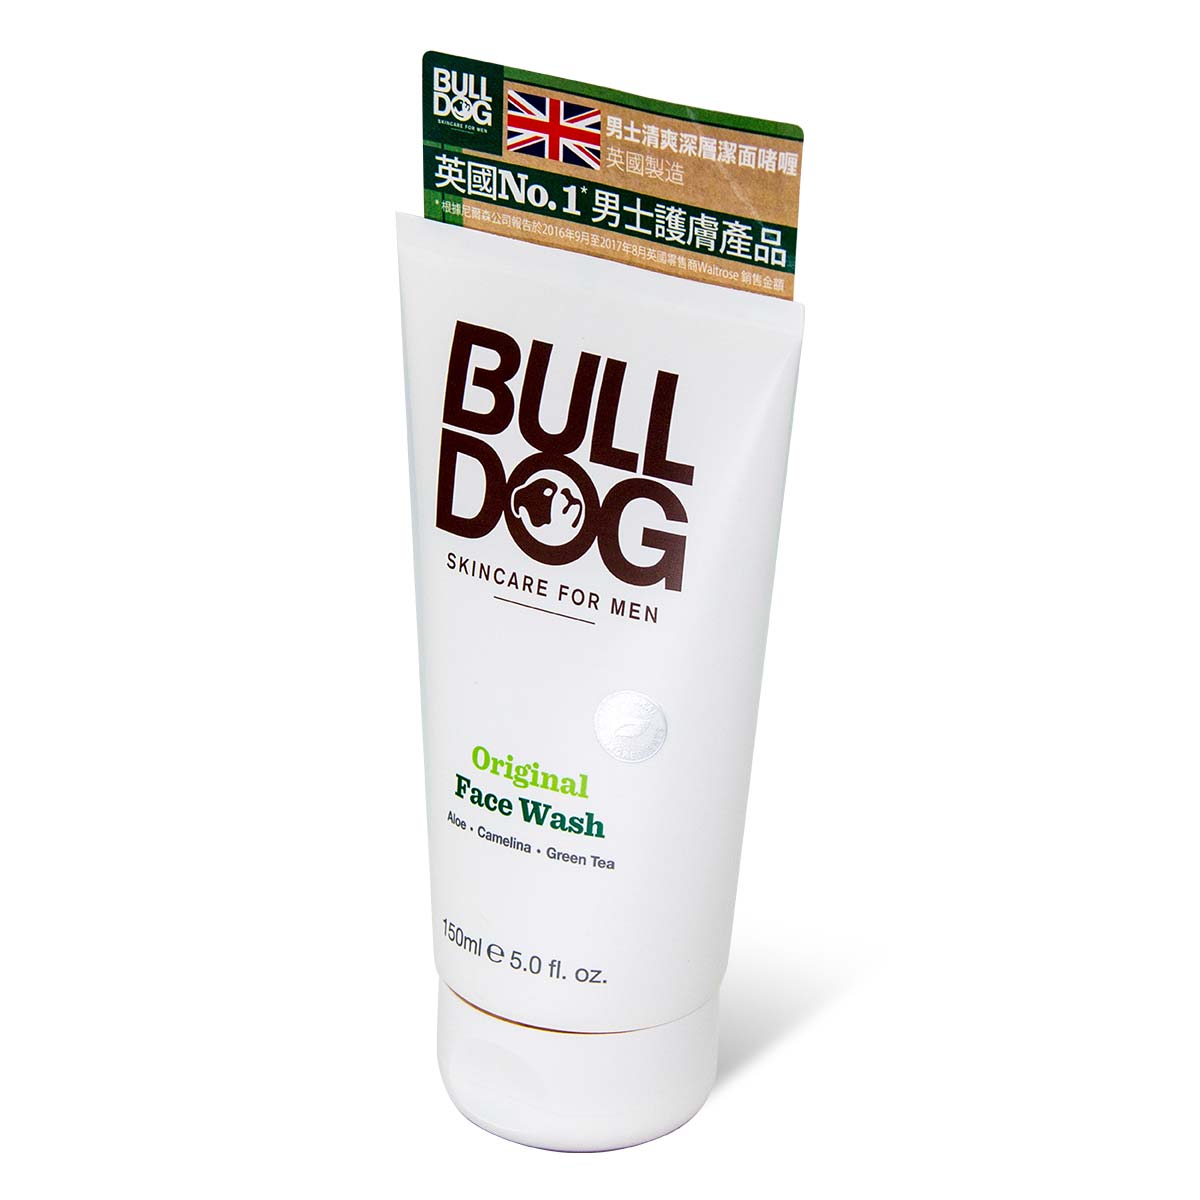 Bulldog Original Face Wash 150ml-p_1